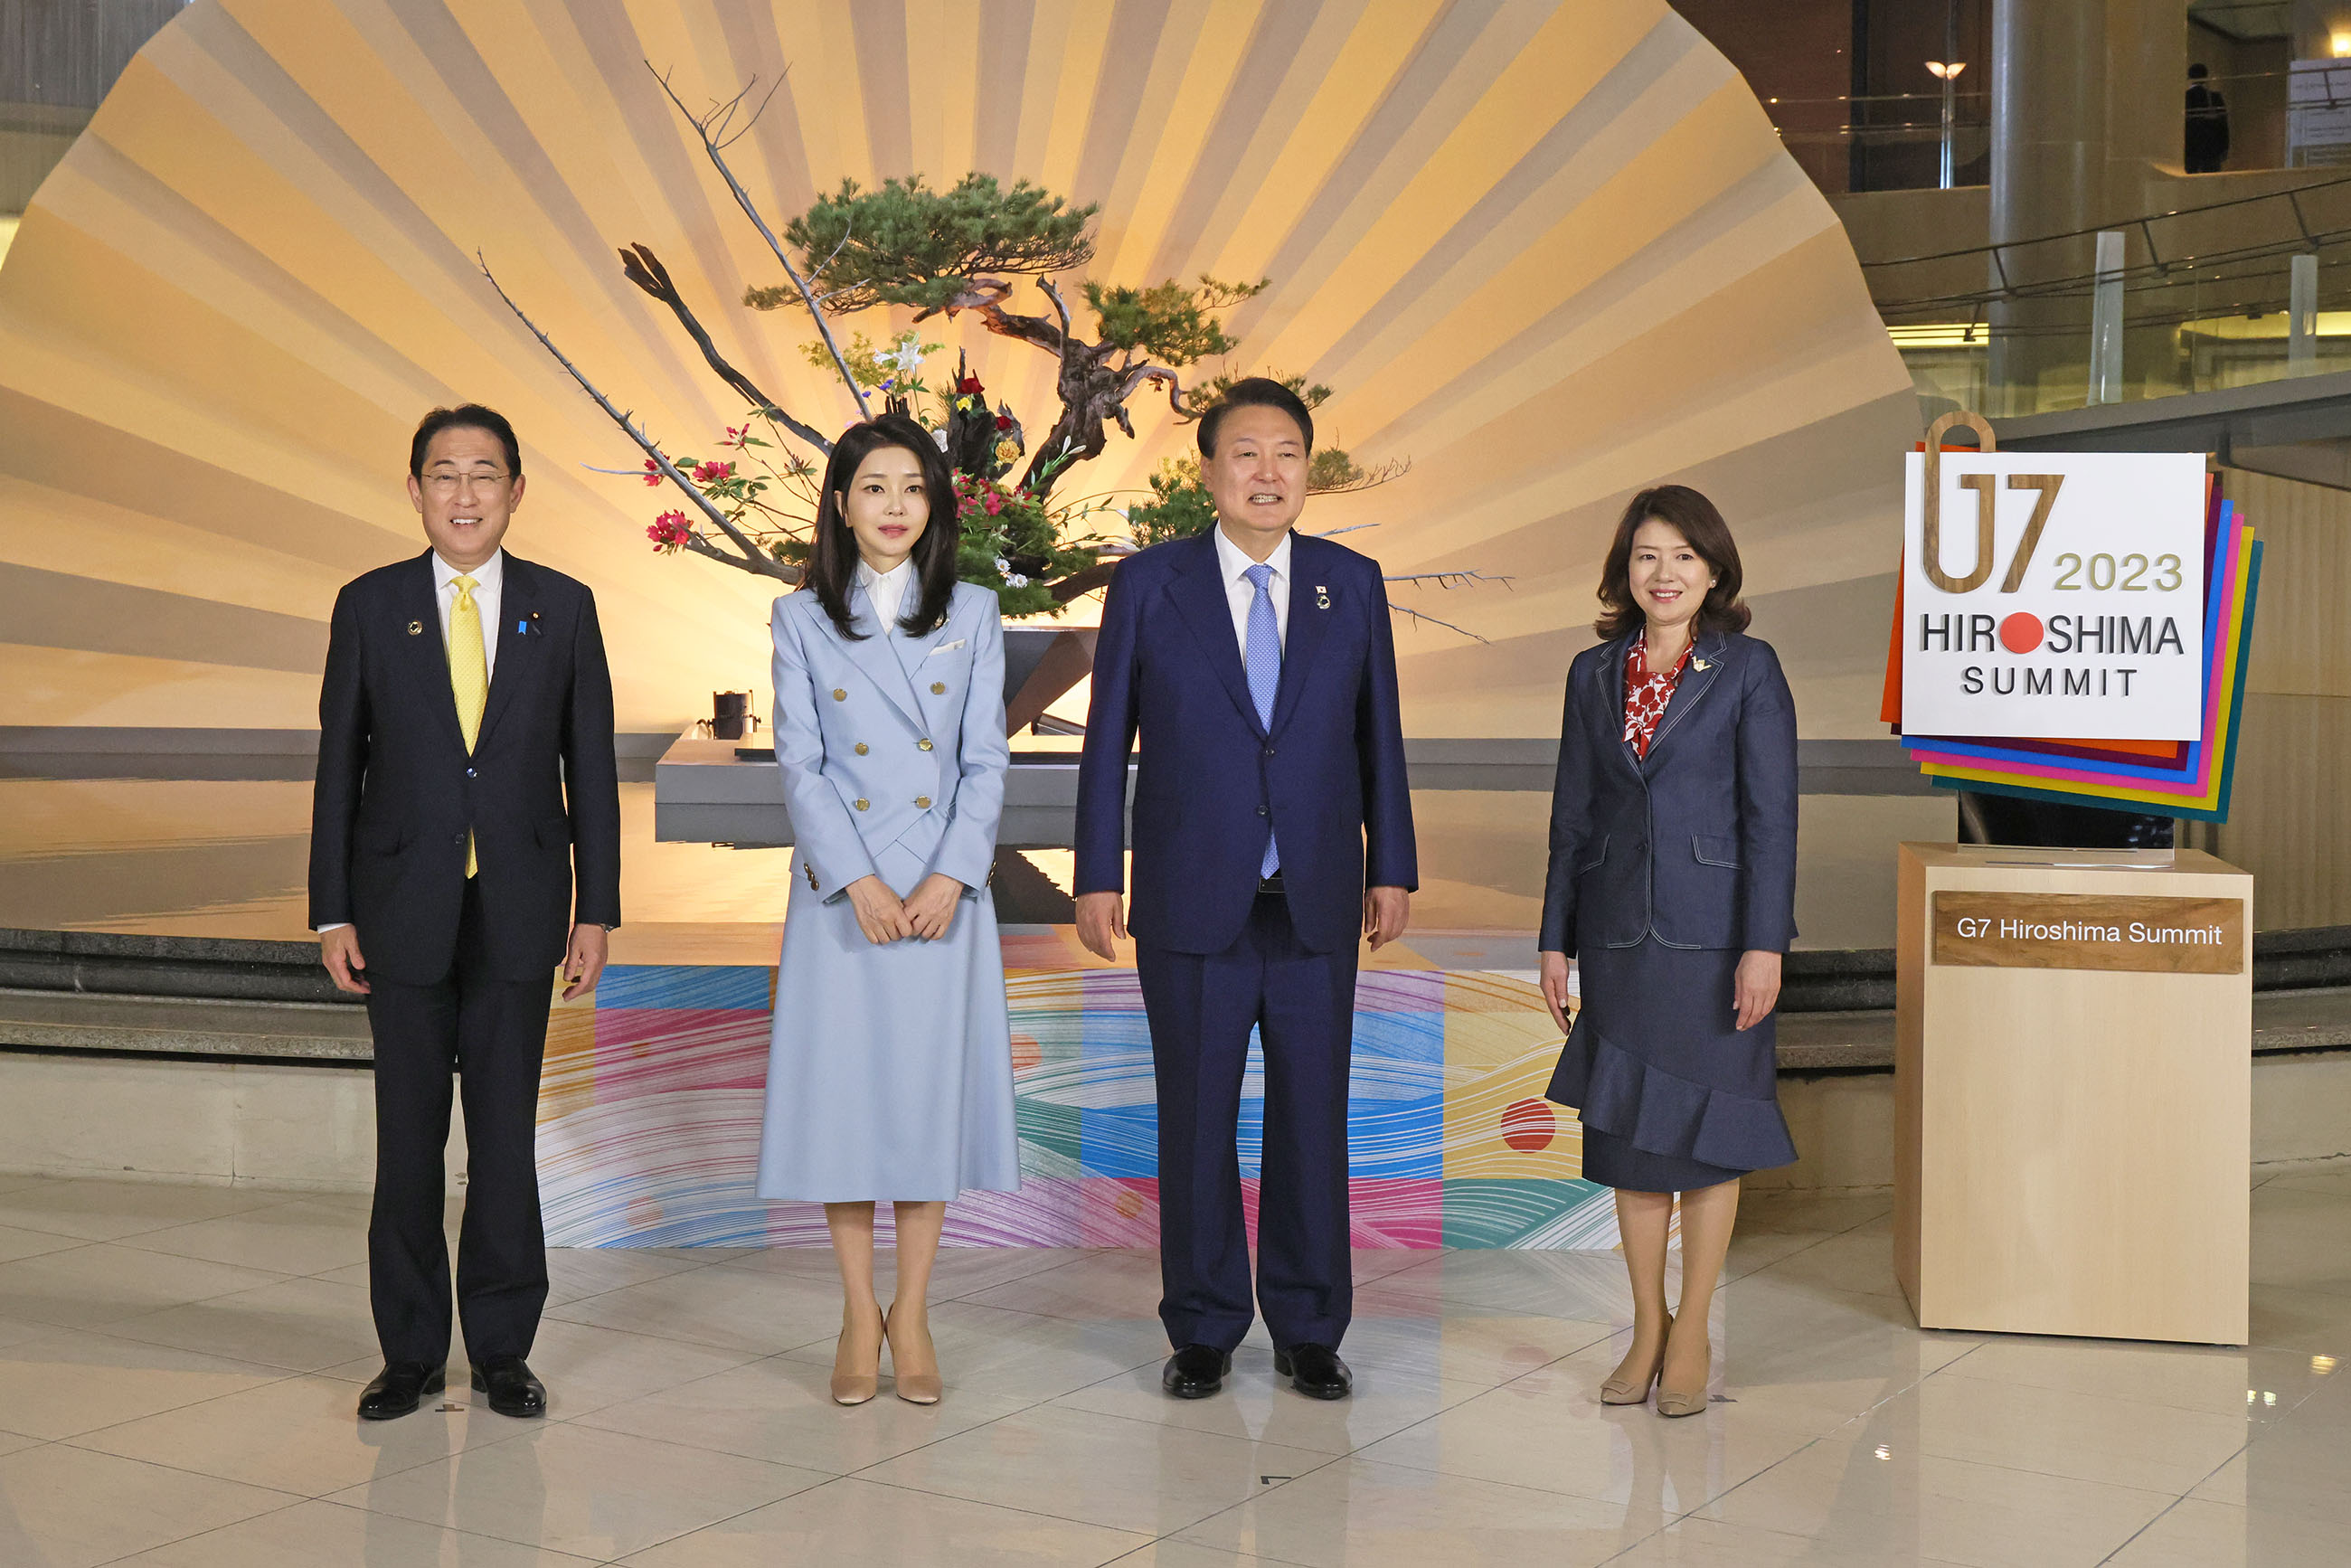 Prime Minister Kishida greeting the ROK President Yoon and his spouse